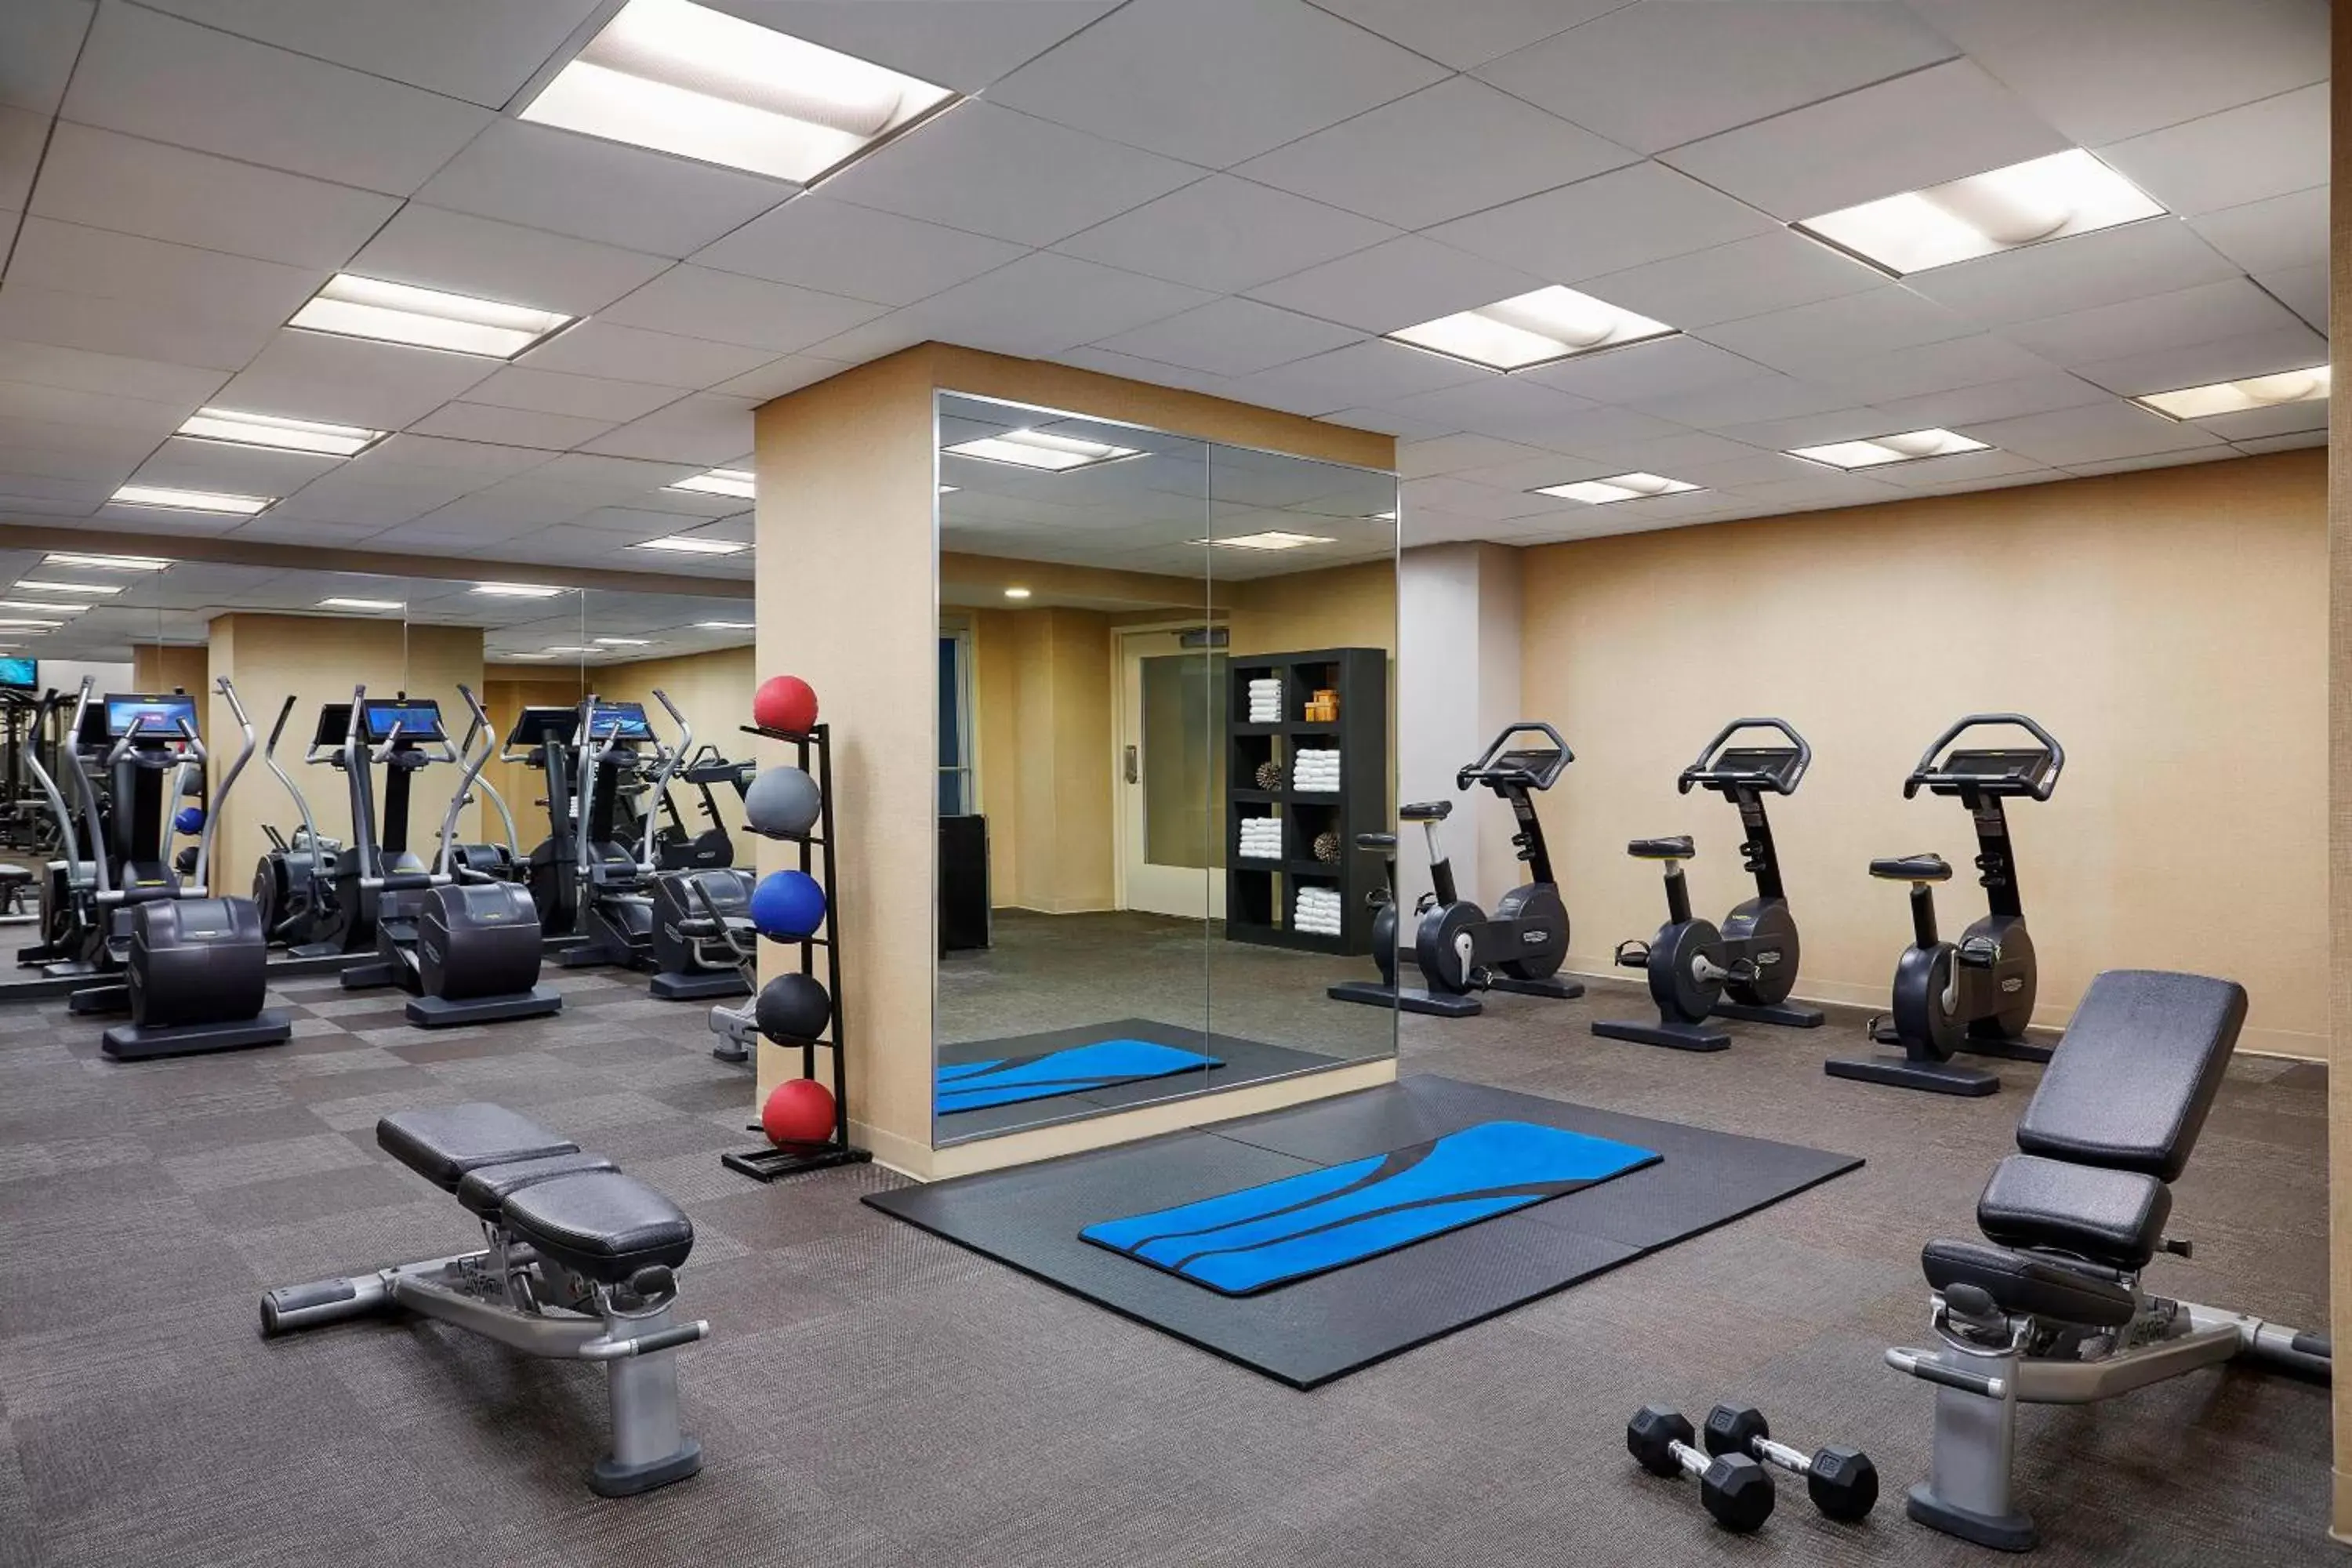 Fitness centre/facilities, Fitness Center/Facilities in JW Marriott Washington, DC